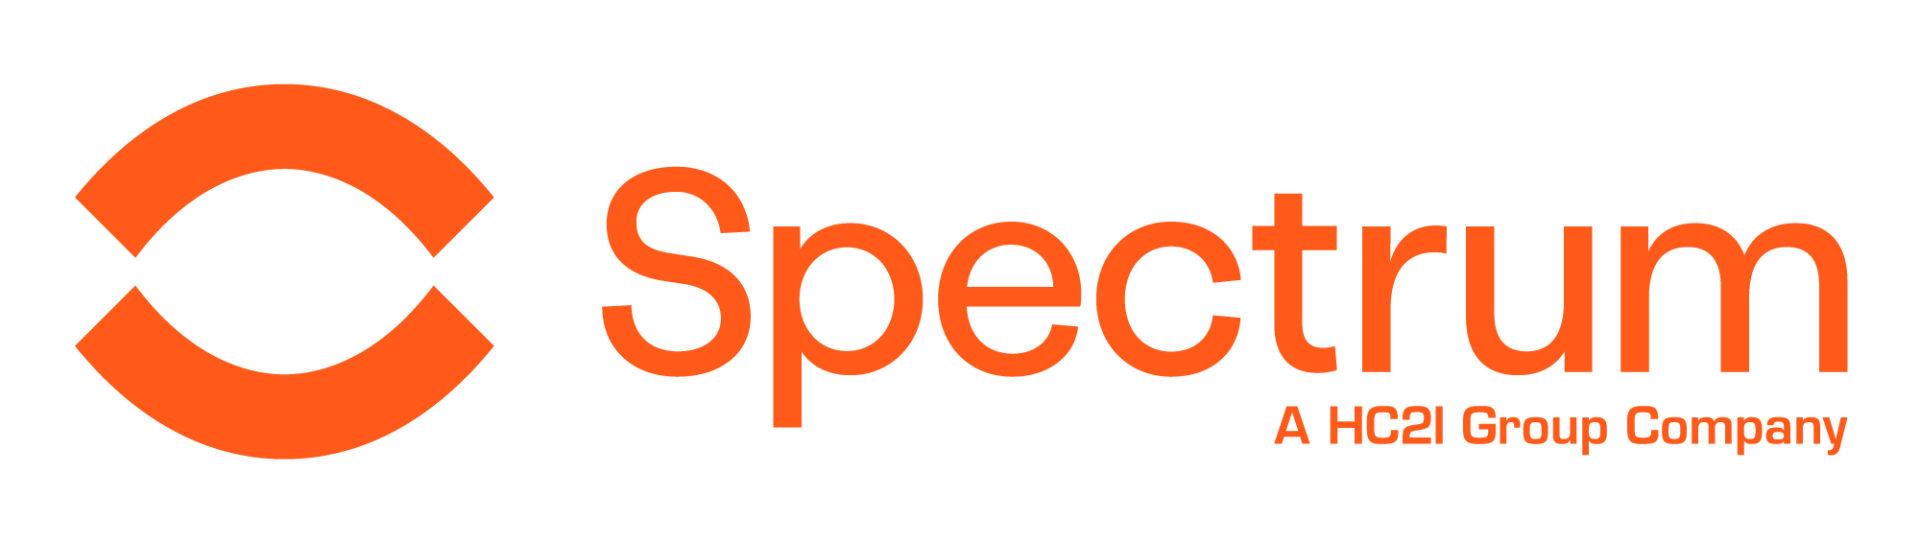 Spectrum HC21 logo orange